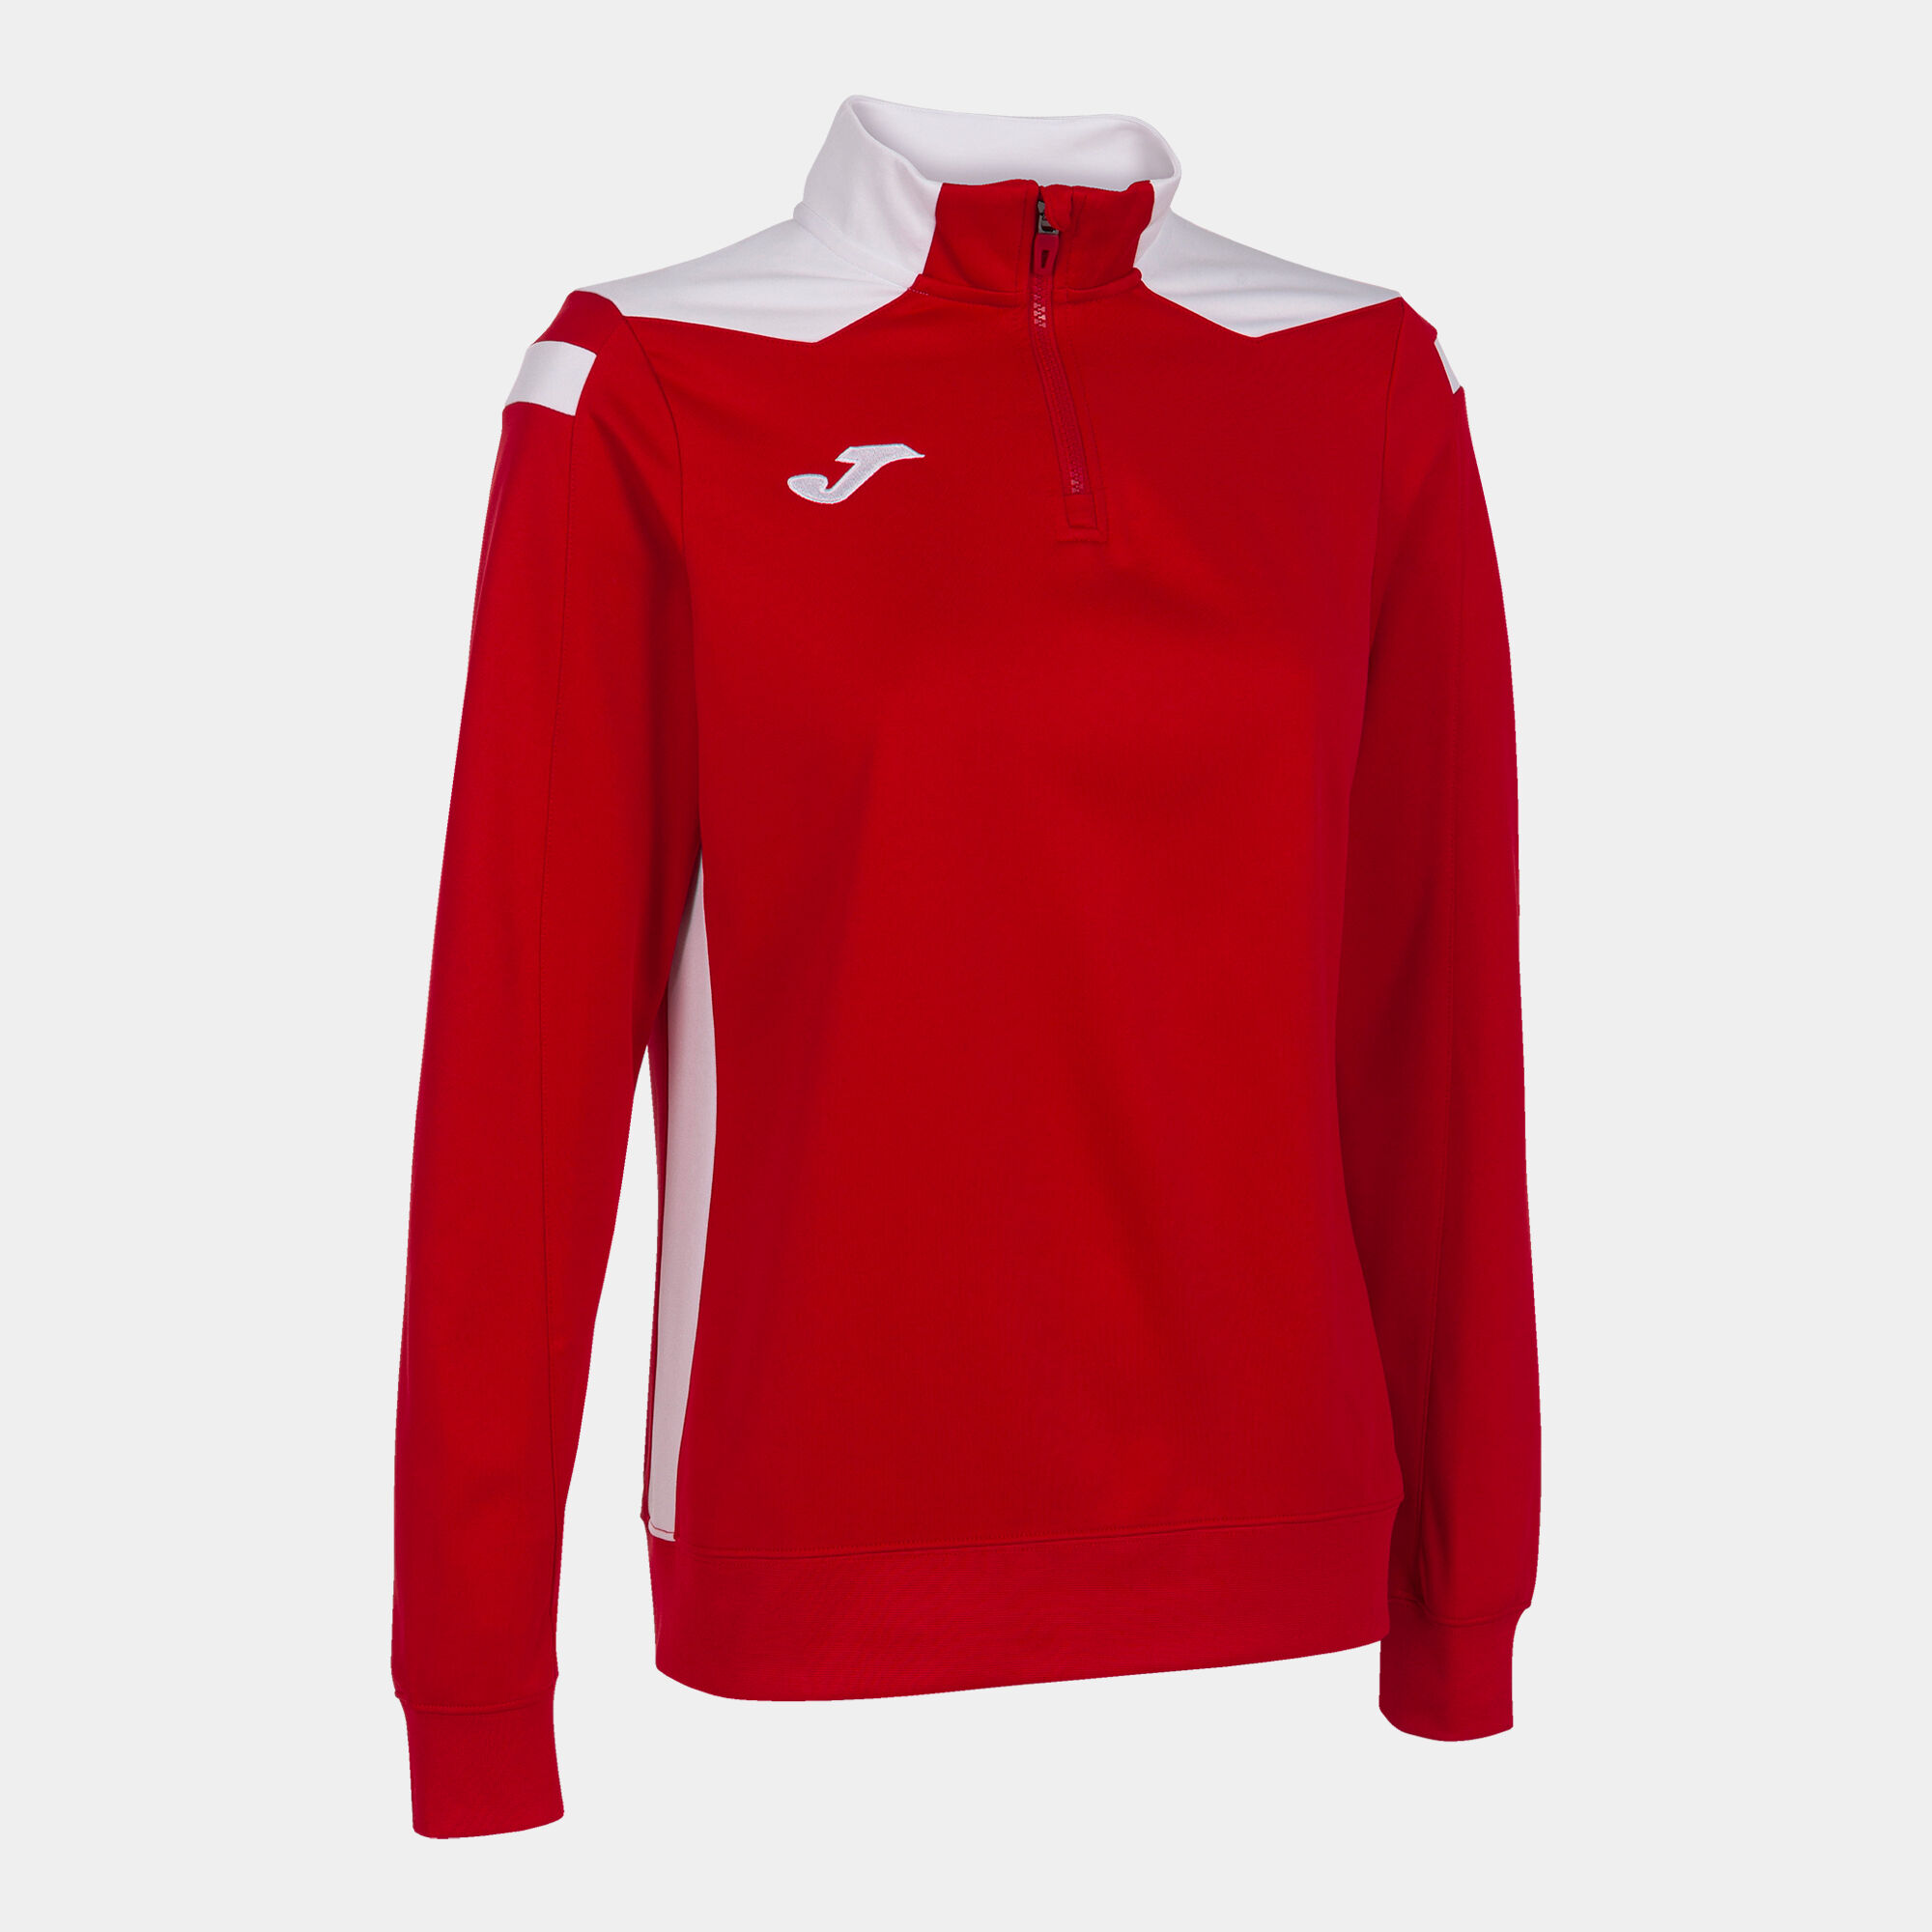 Sweat-shirt femme Championship VI rouge blanc